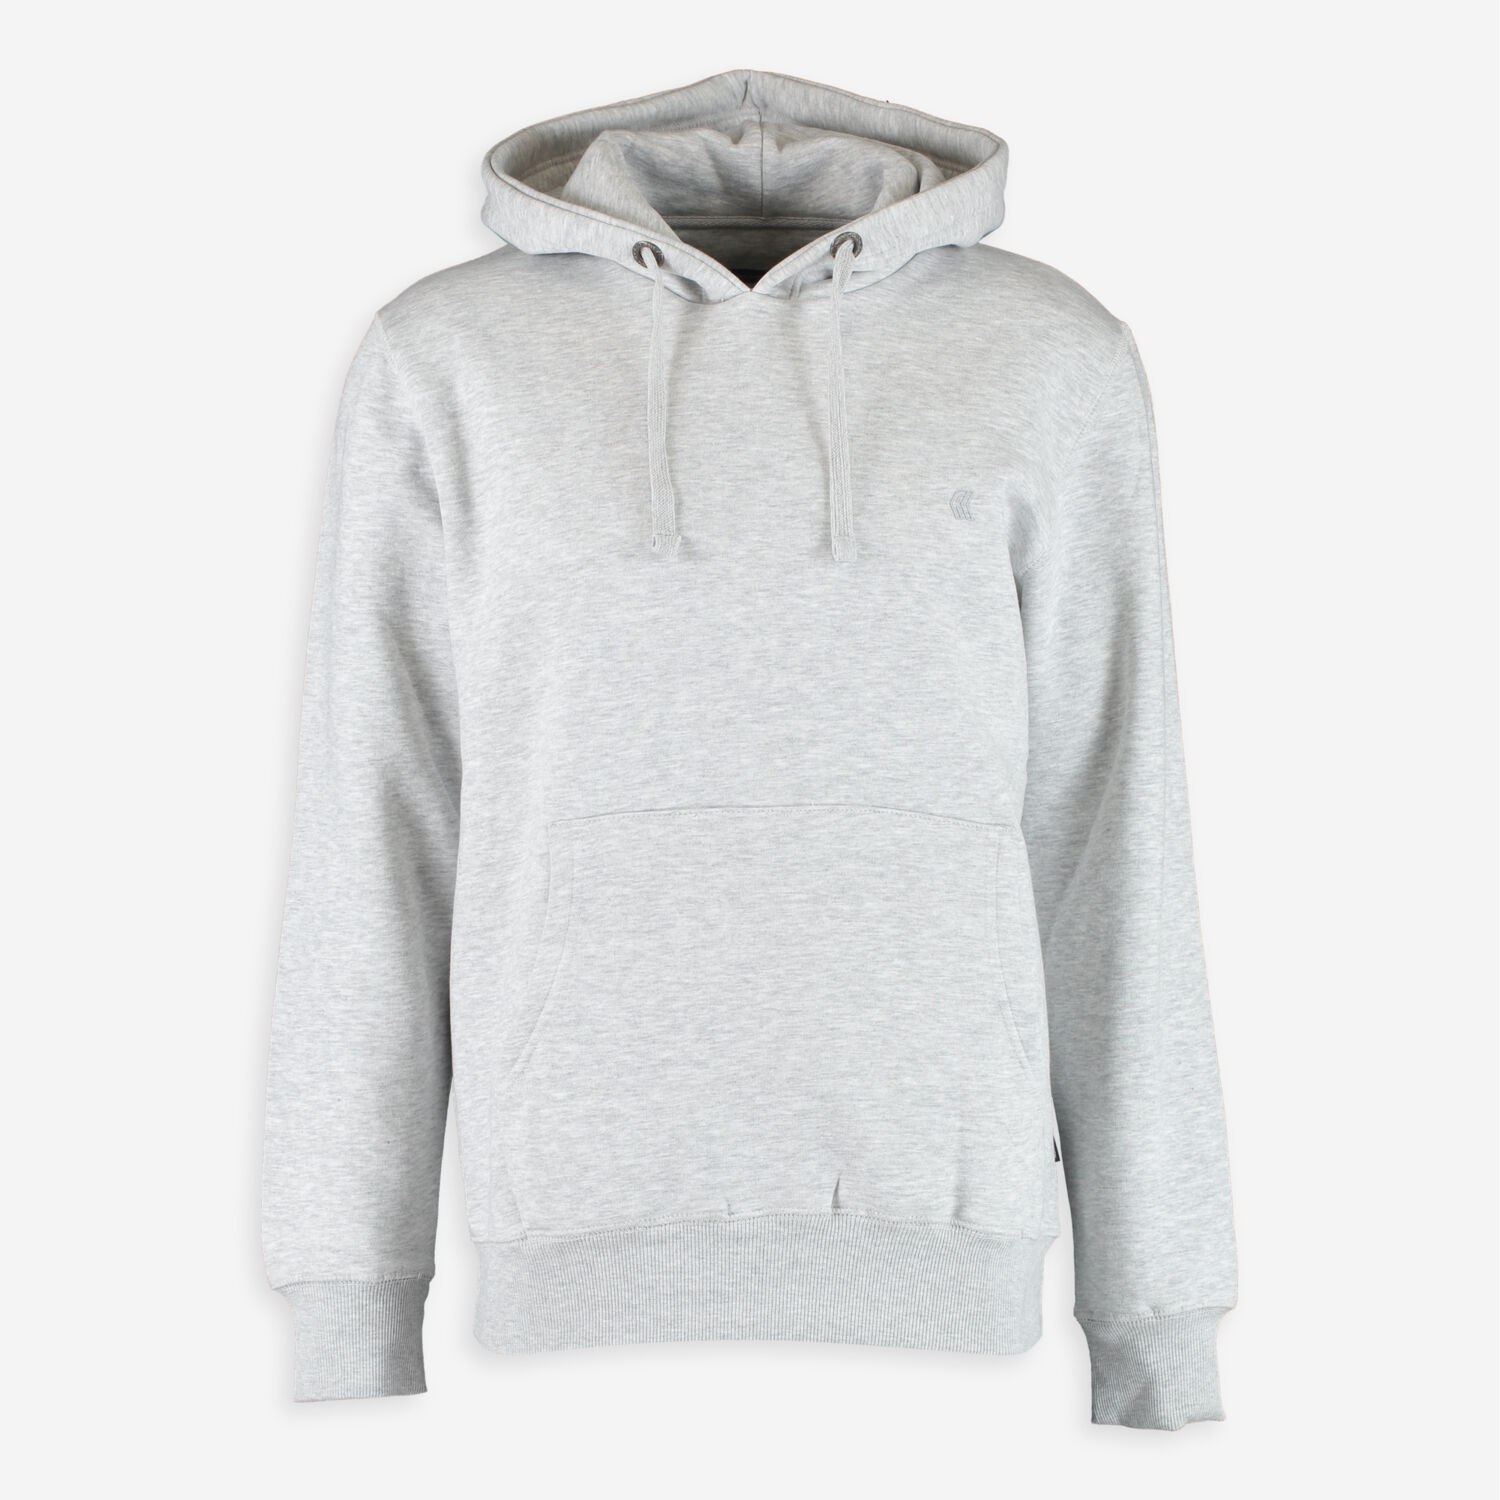 Light Grey Marl Sweatshirt - TK Maxx UK